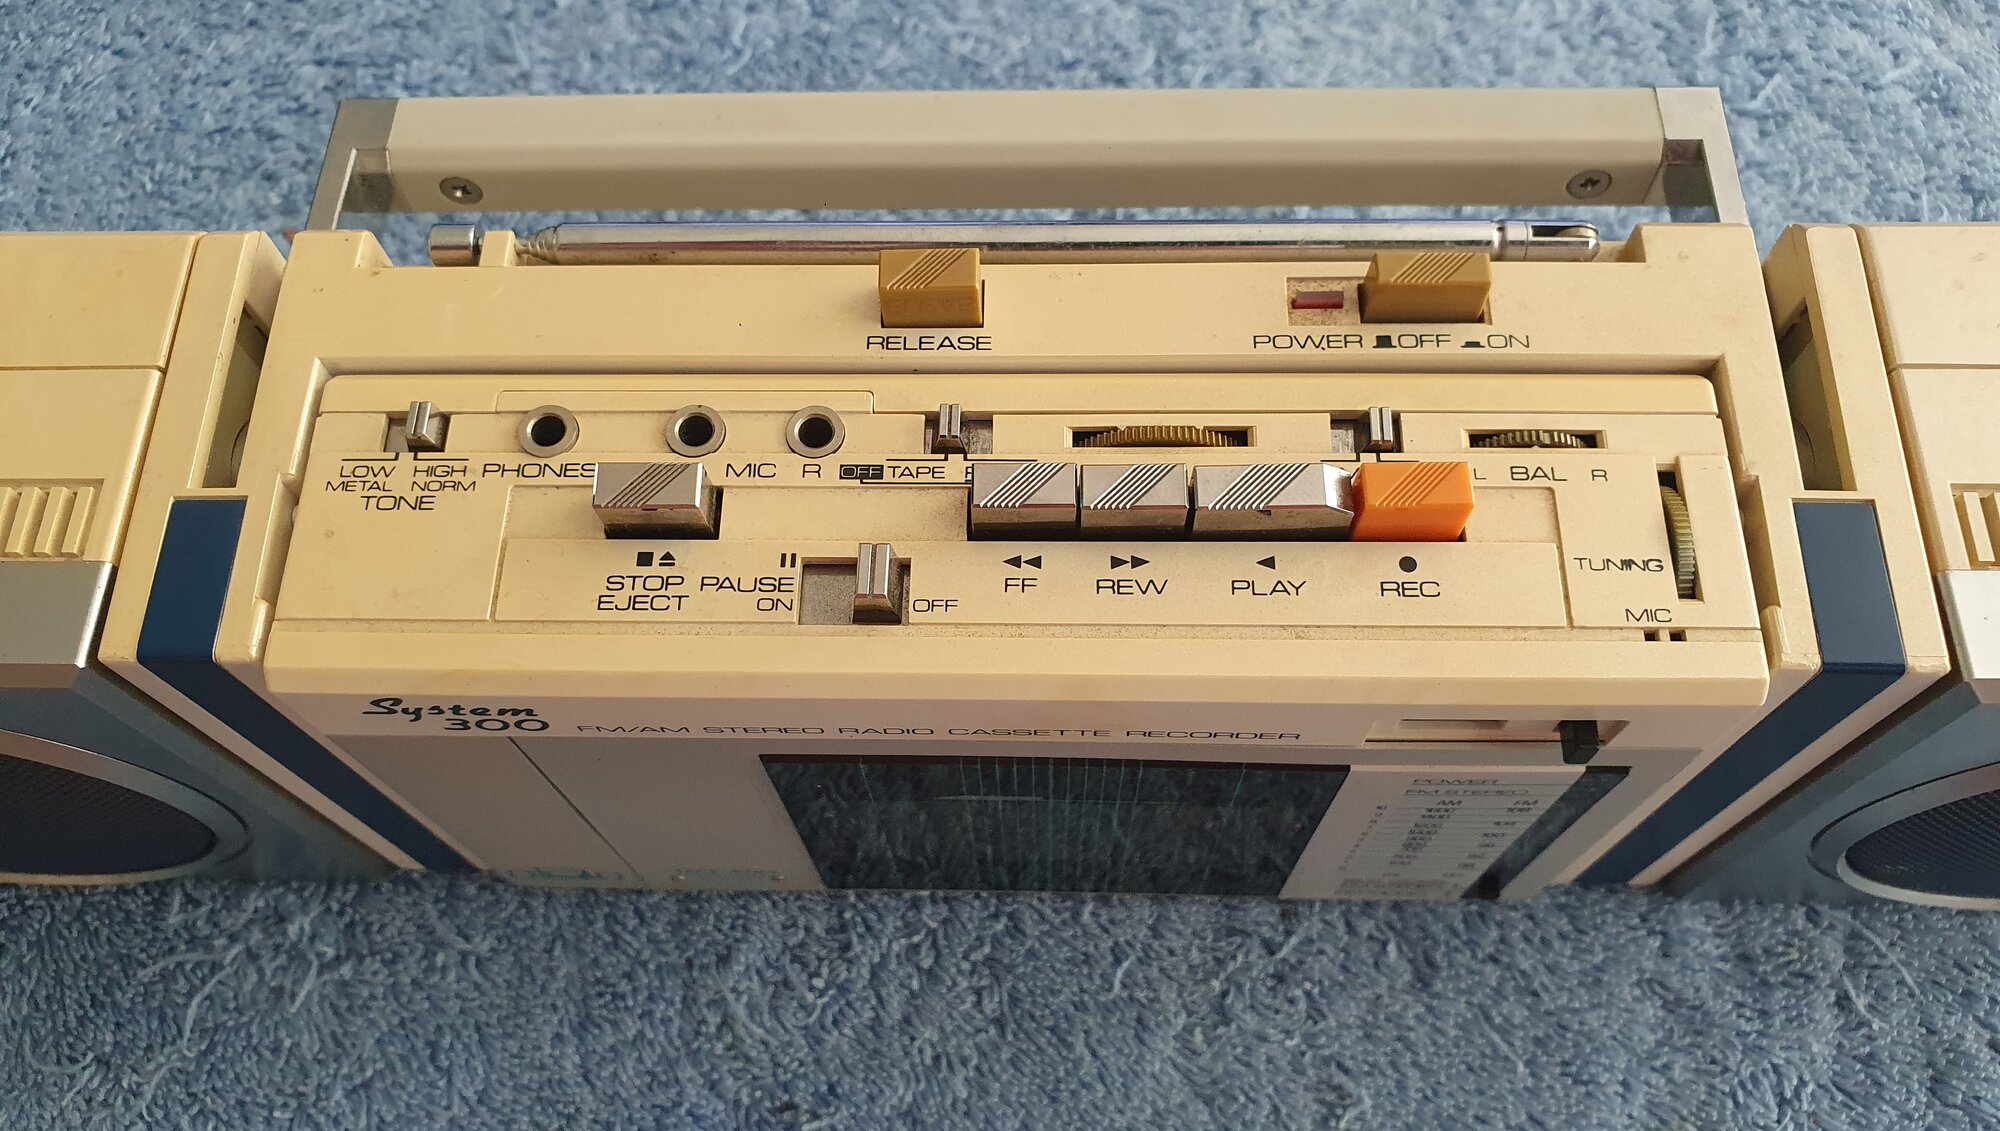 System 300 Mini Stereo Radio Cassette Recorder - May 2022 (4).jpg